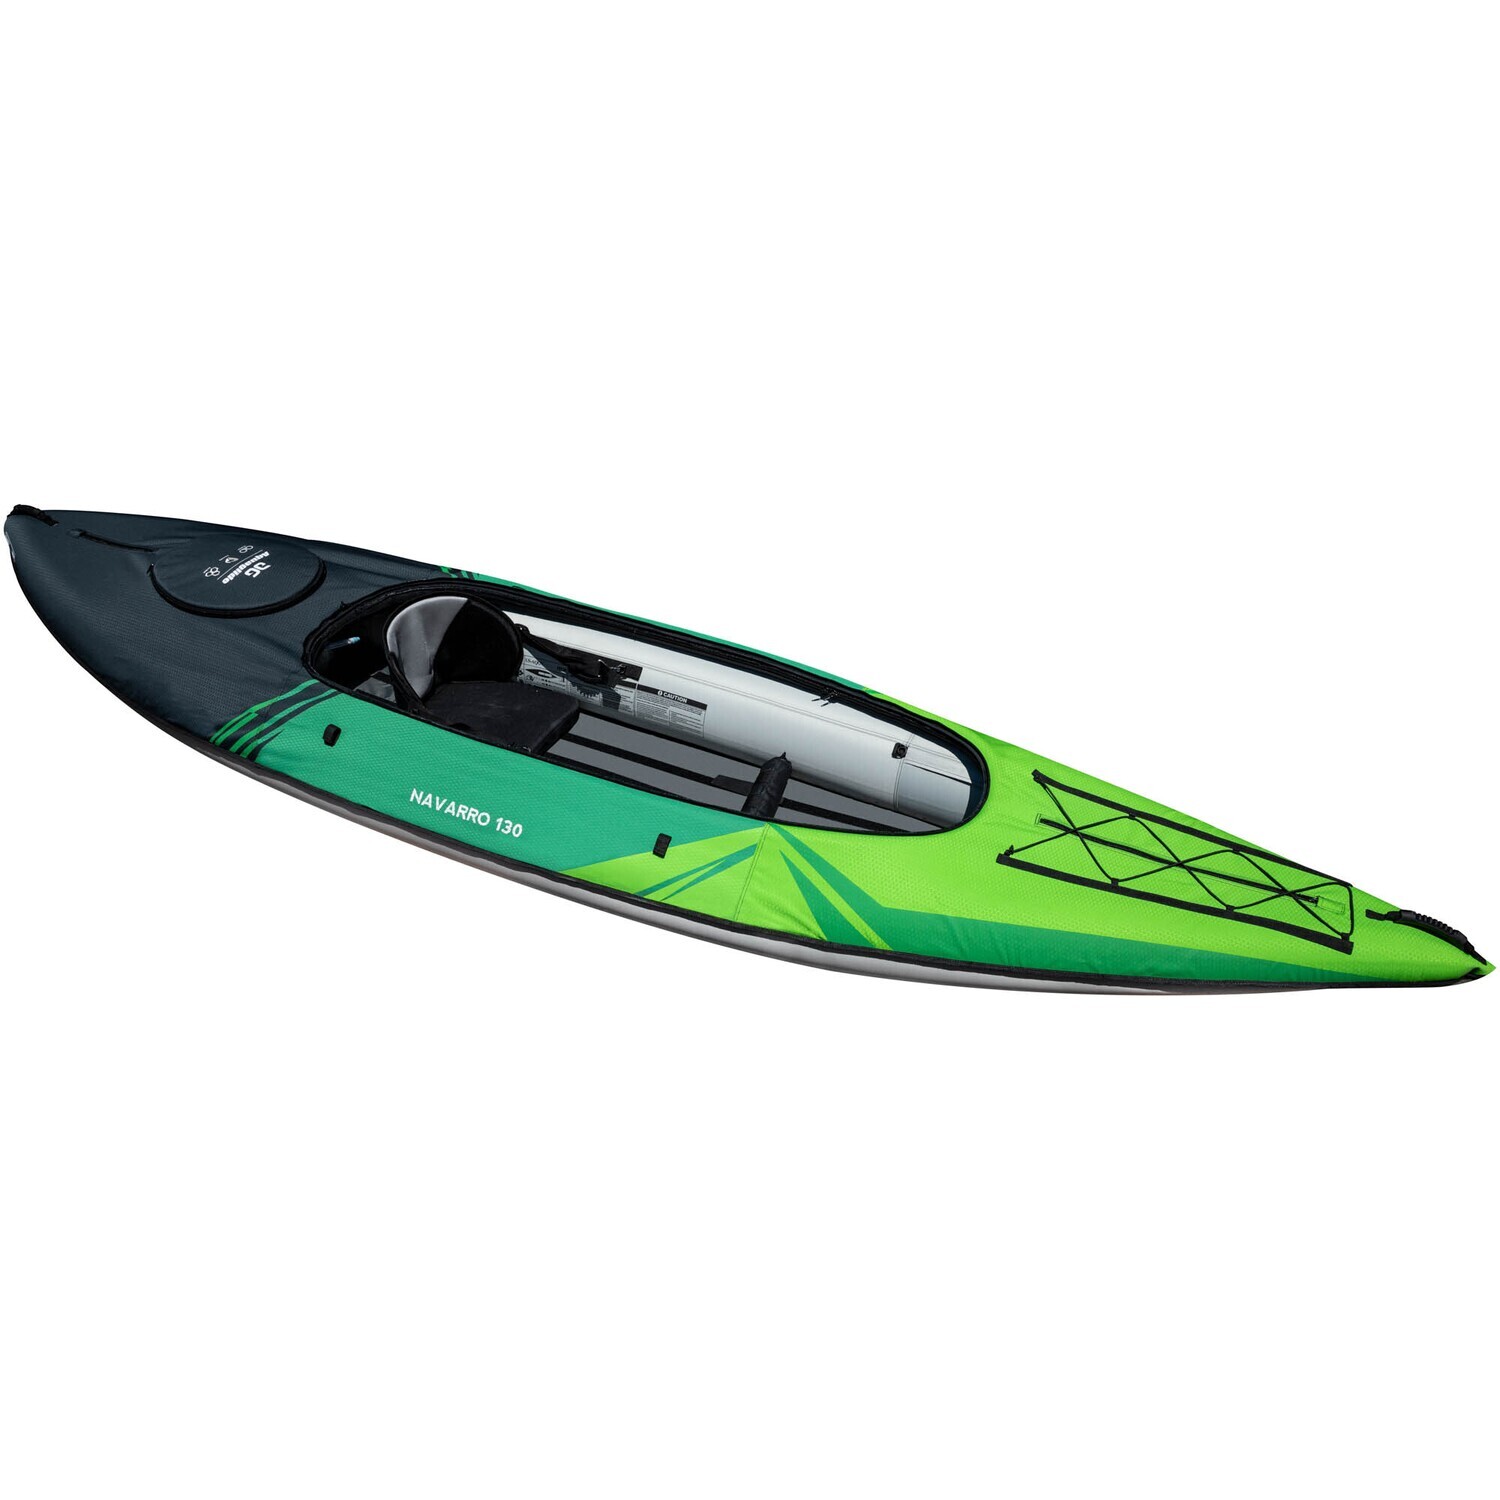 Navarro 130 Inflatable Kayak 